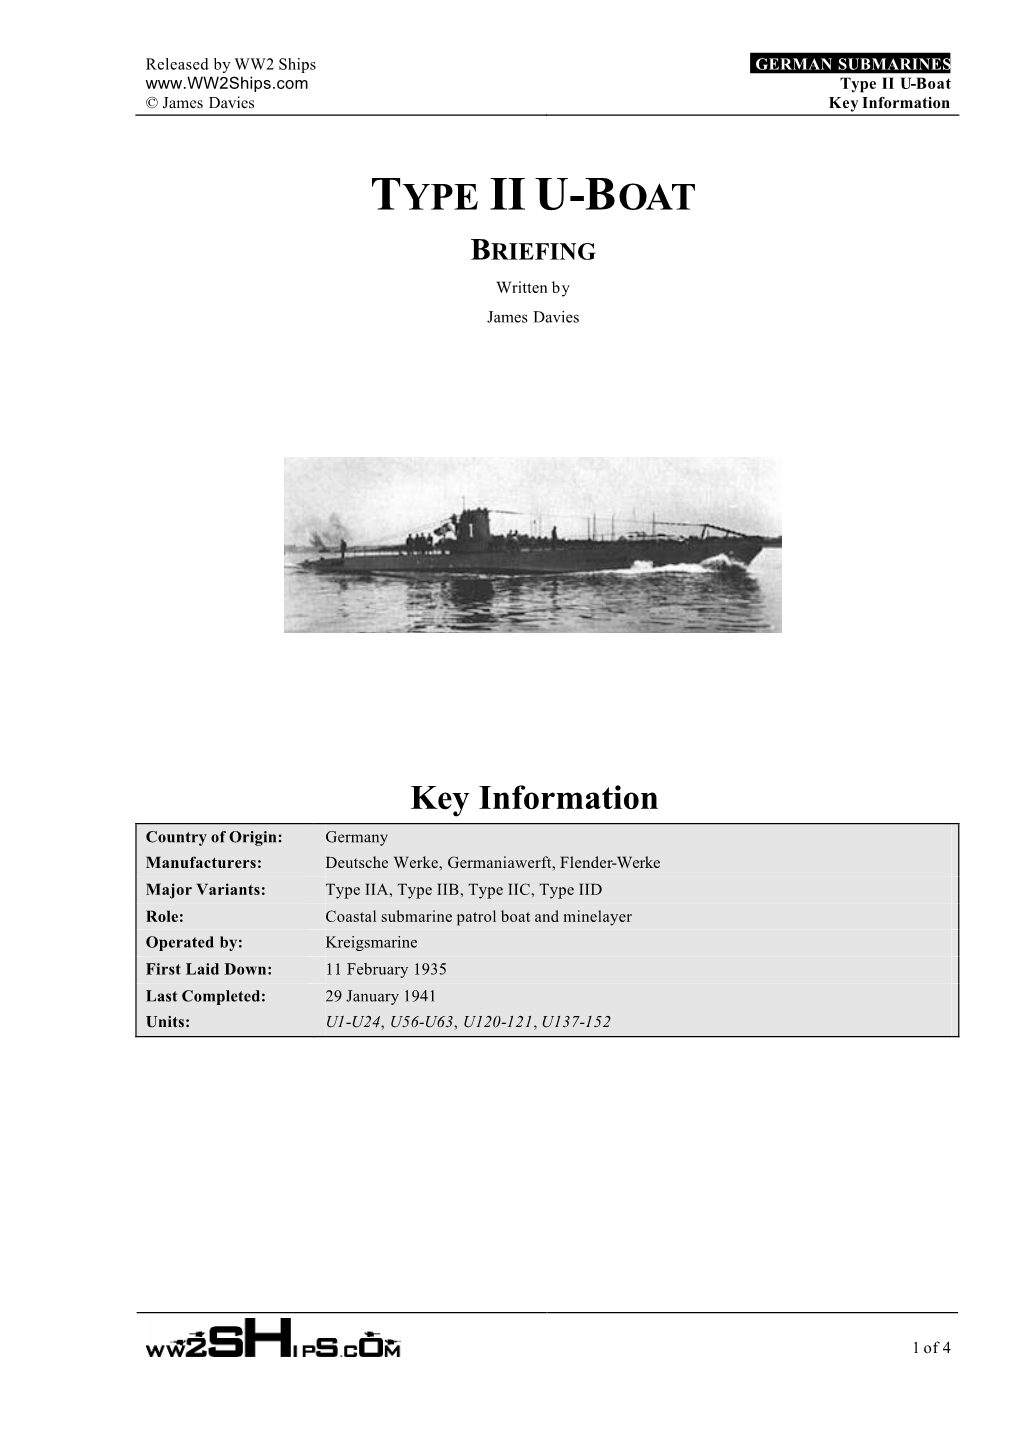 Type II U-Boat Short